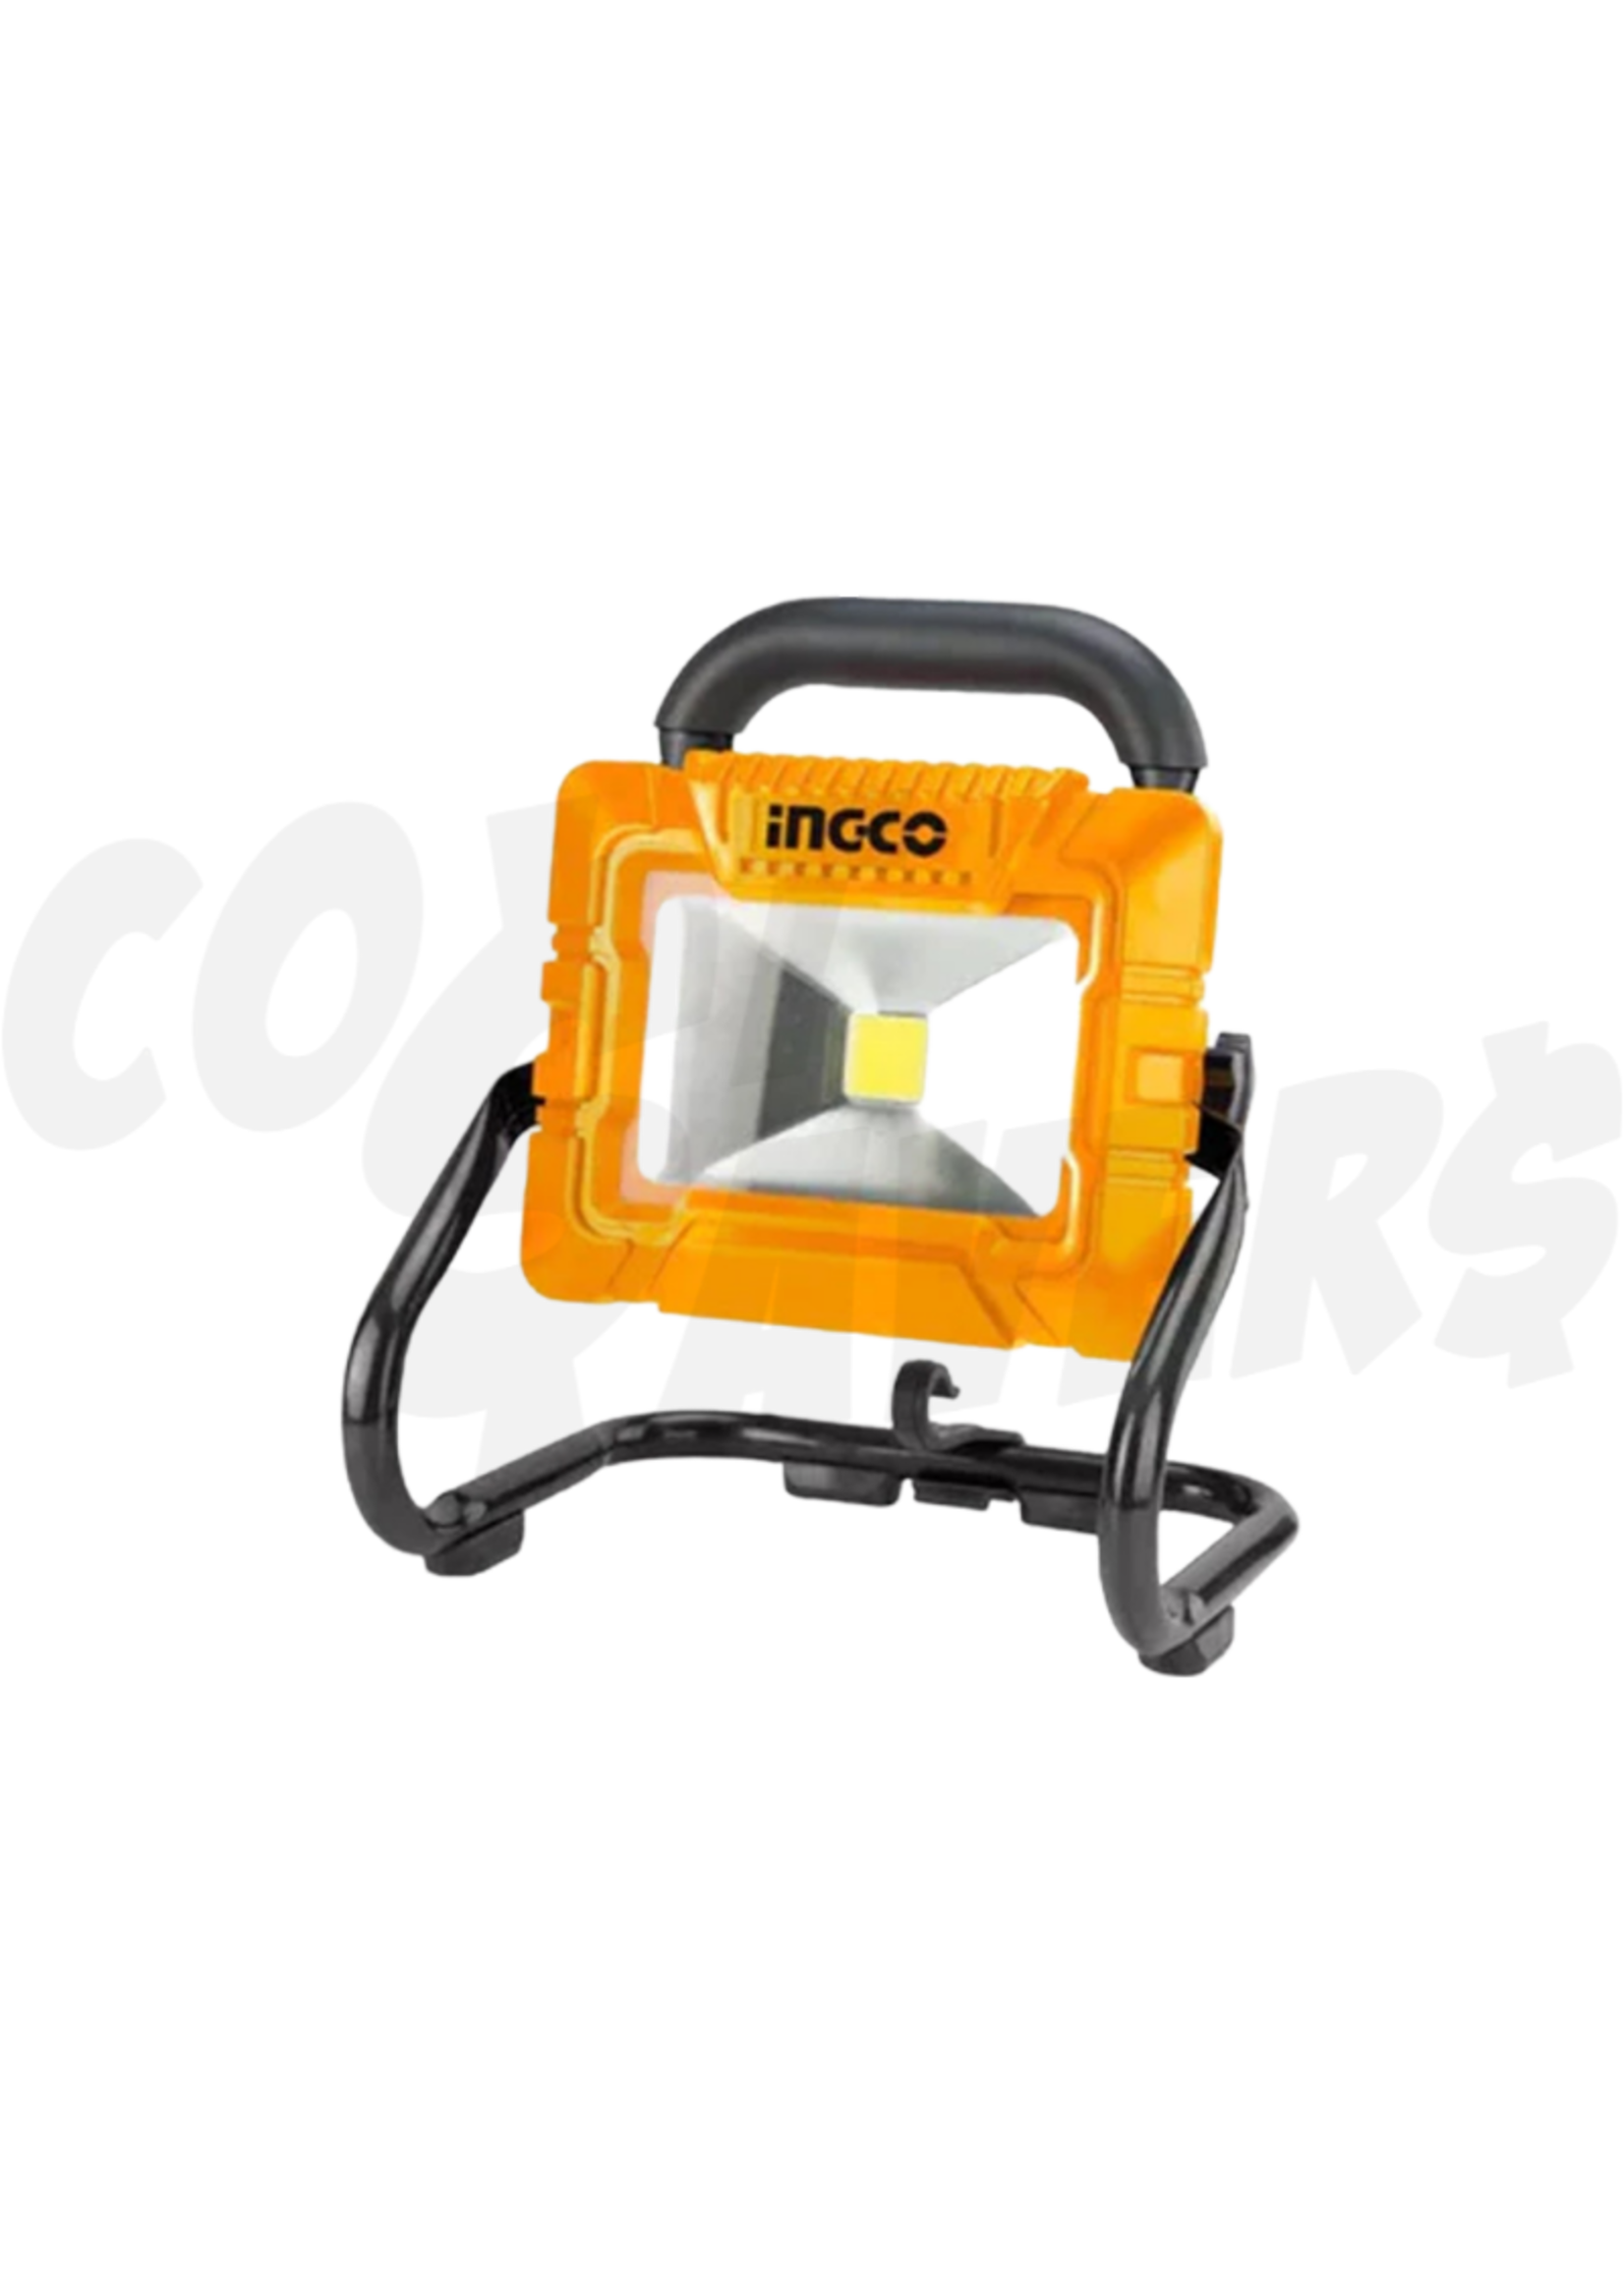 Ingco Ingco Lithium-Lon Portable Lamp 20V